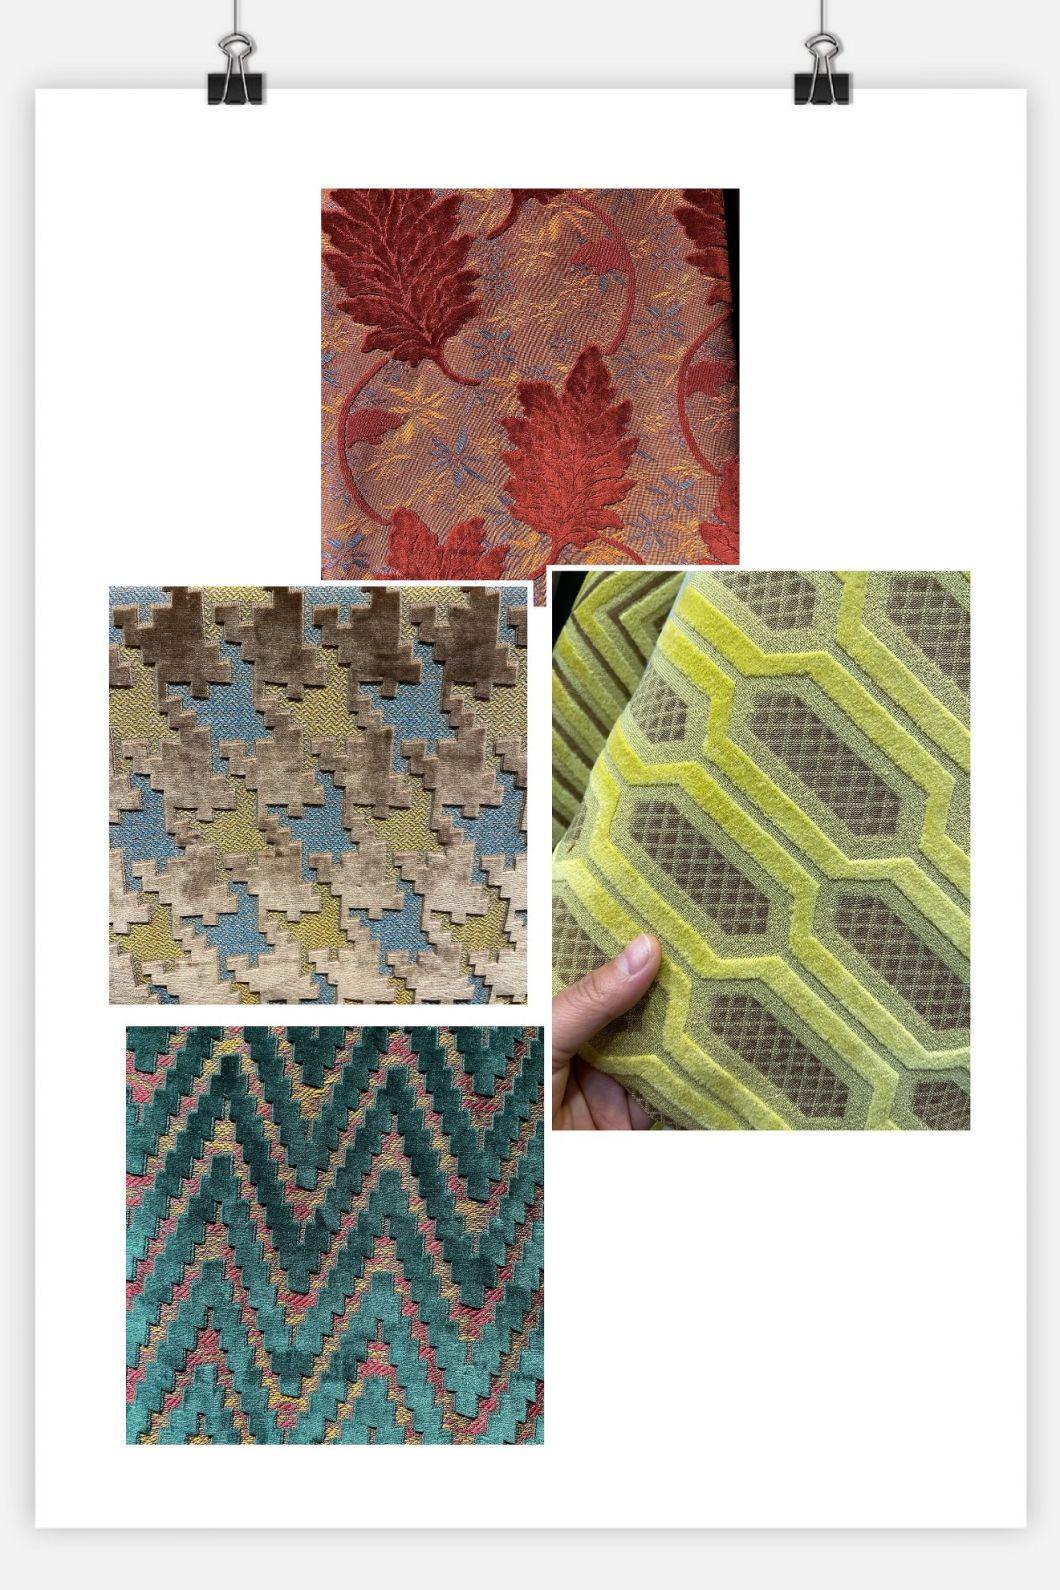 Popular Teddy Fur Woven Fabric Sofa Fabric Furniture Fabric Decorative Cloth Upholstery Fabric (WH35)